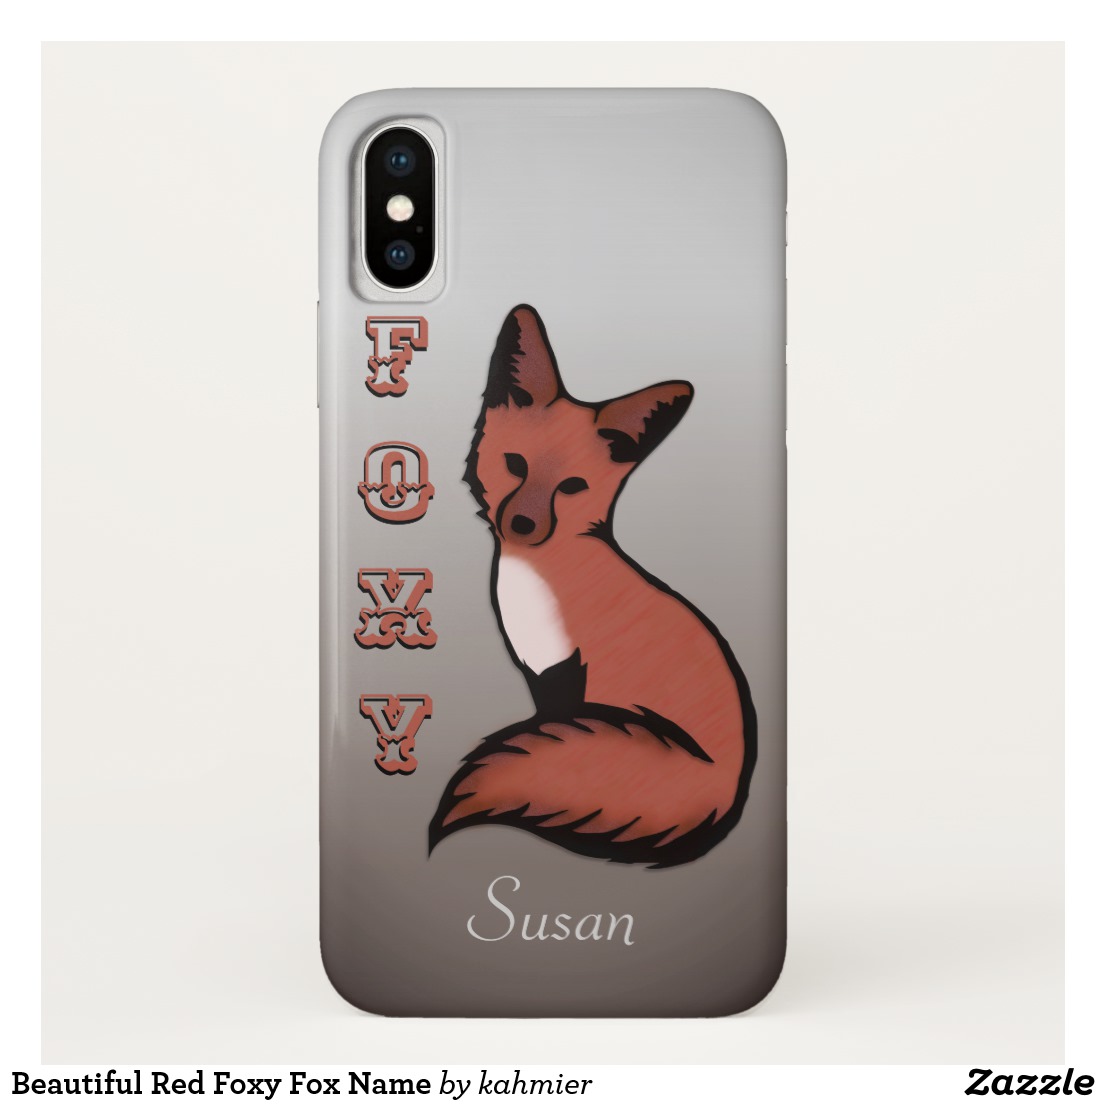 Beautiful Red Foxy Fox Name iPhone X Case